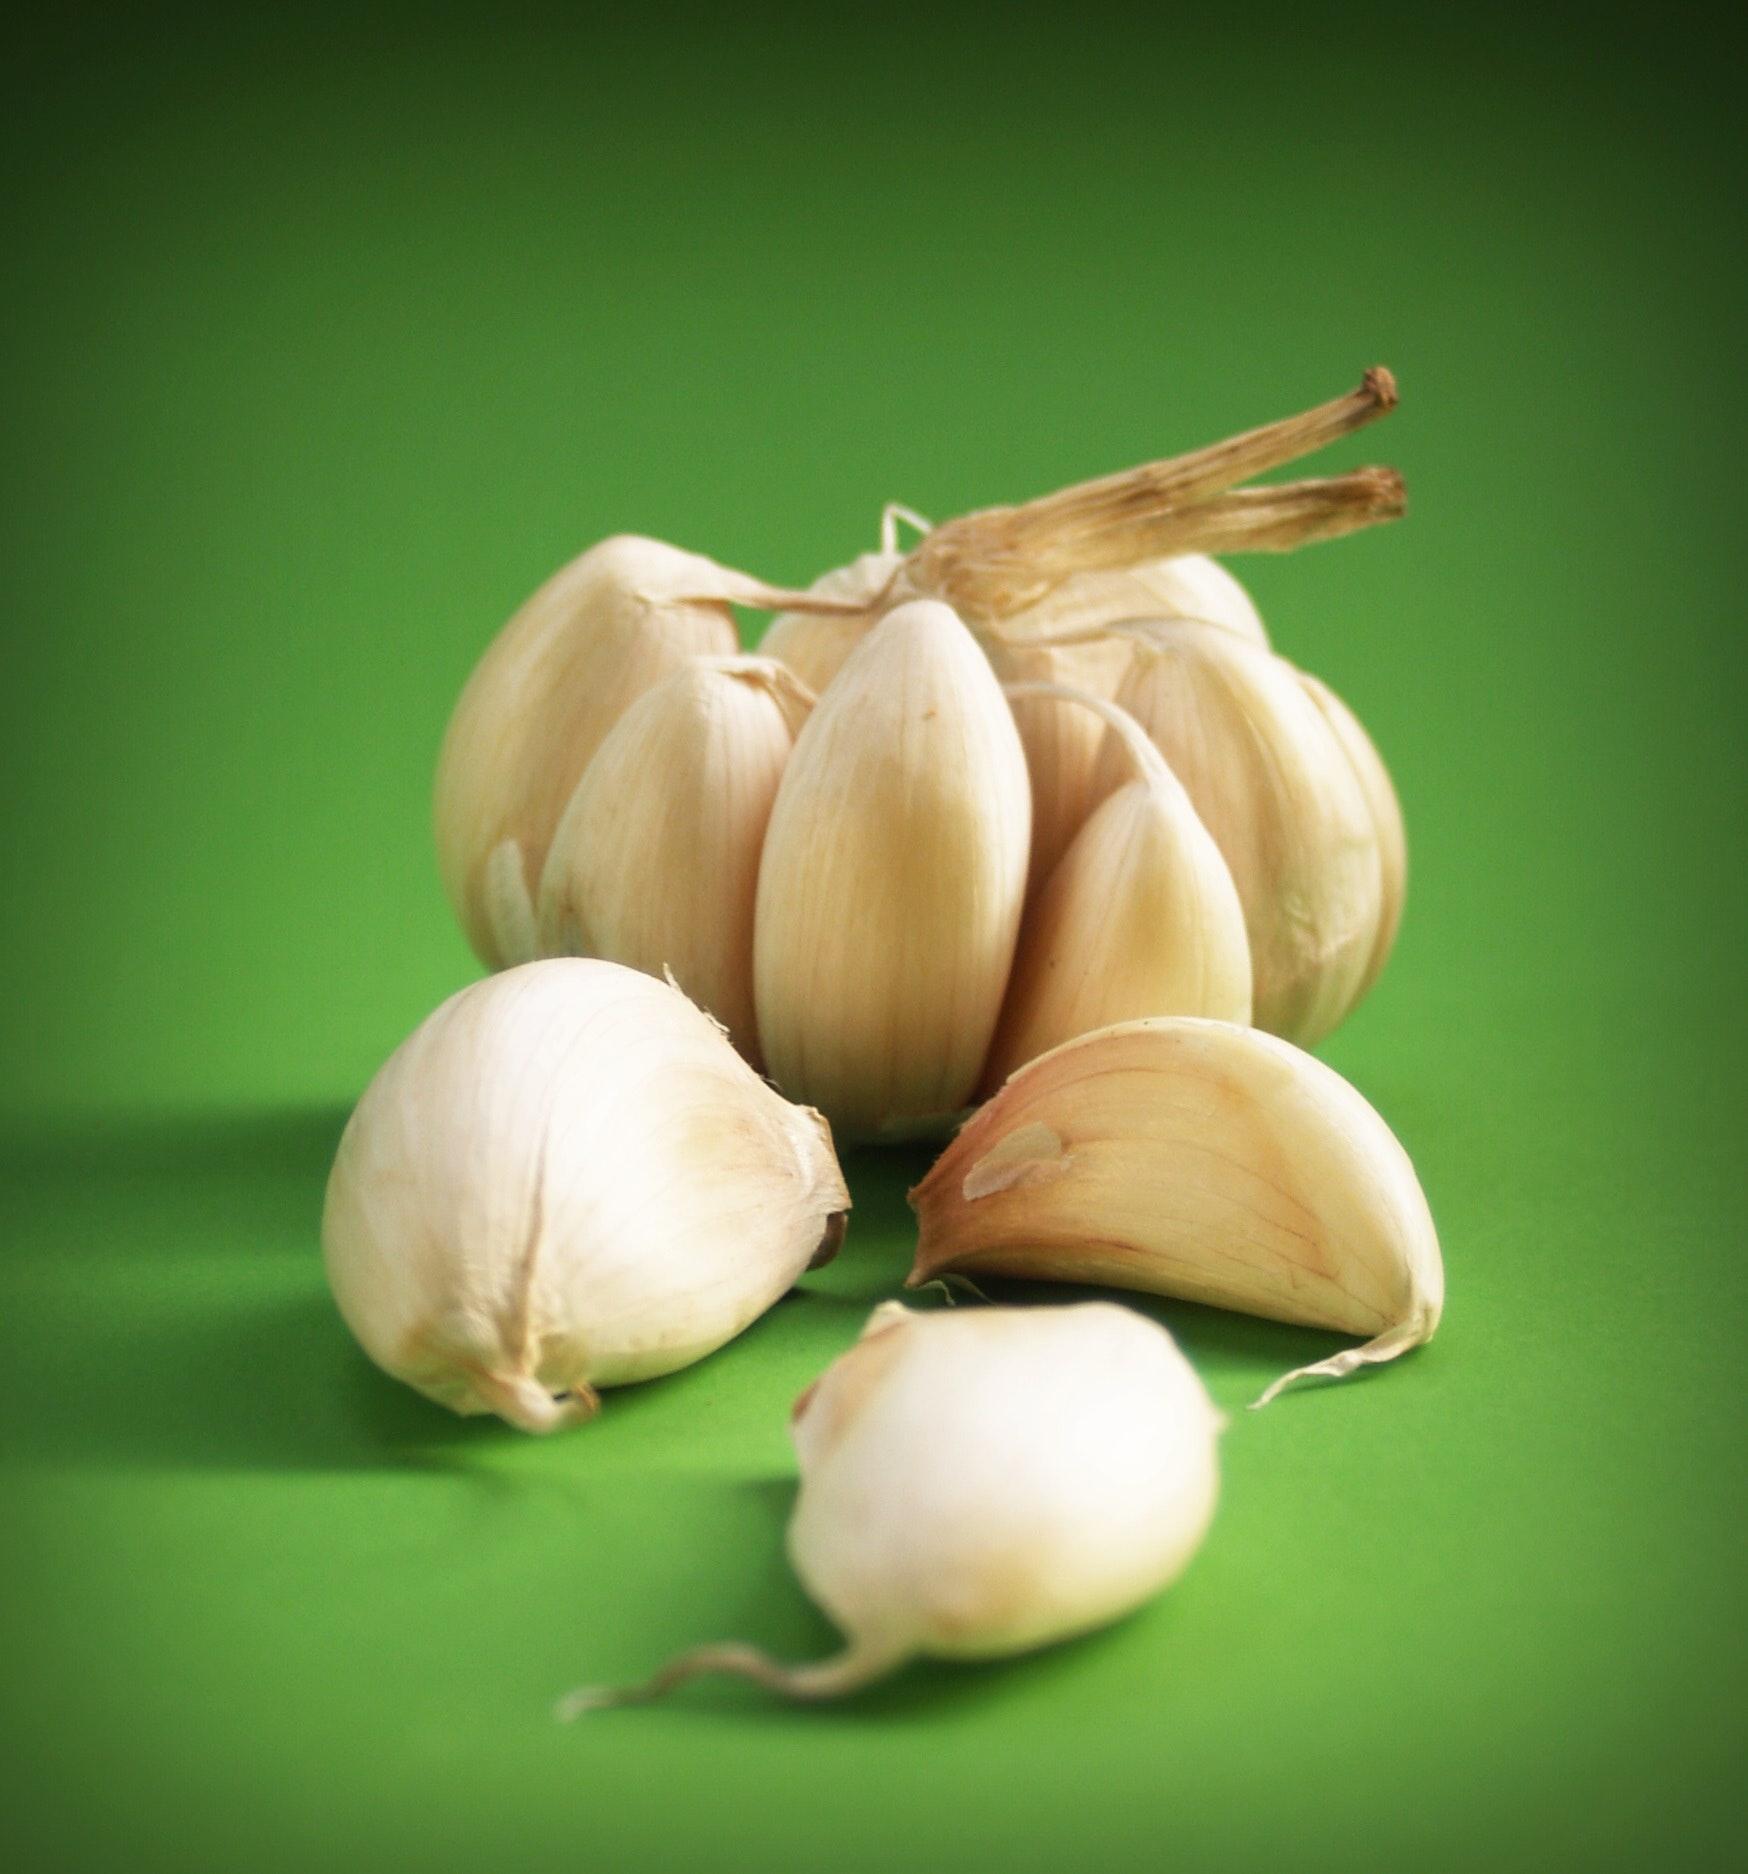 Great Garlic Photo